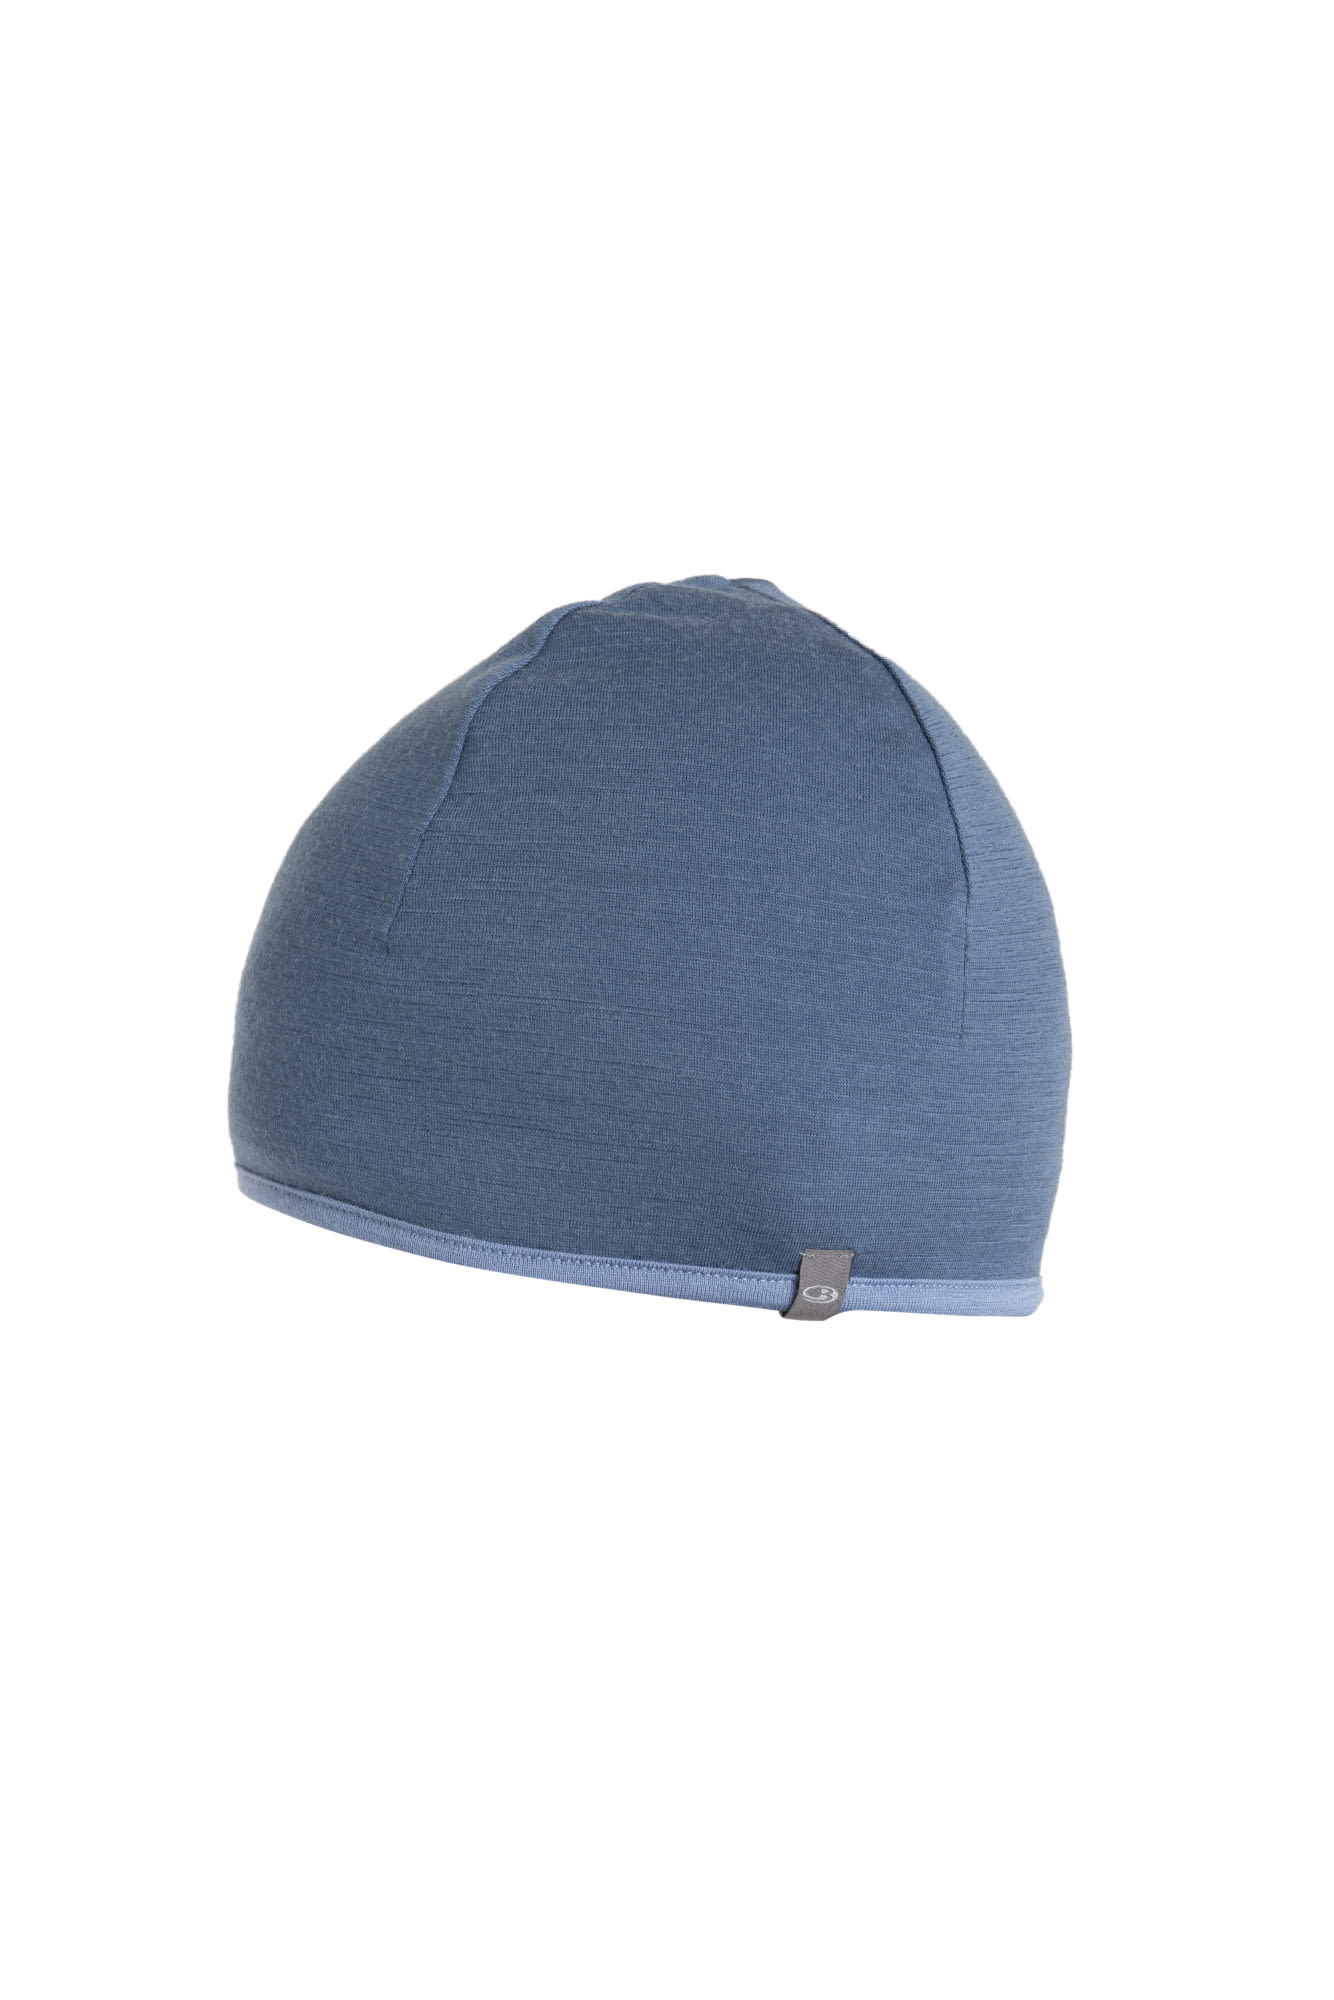 Icebreaker Pocket Hat Blau | Größe One Size |  Accessoires